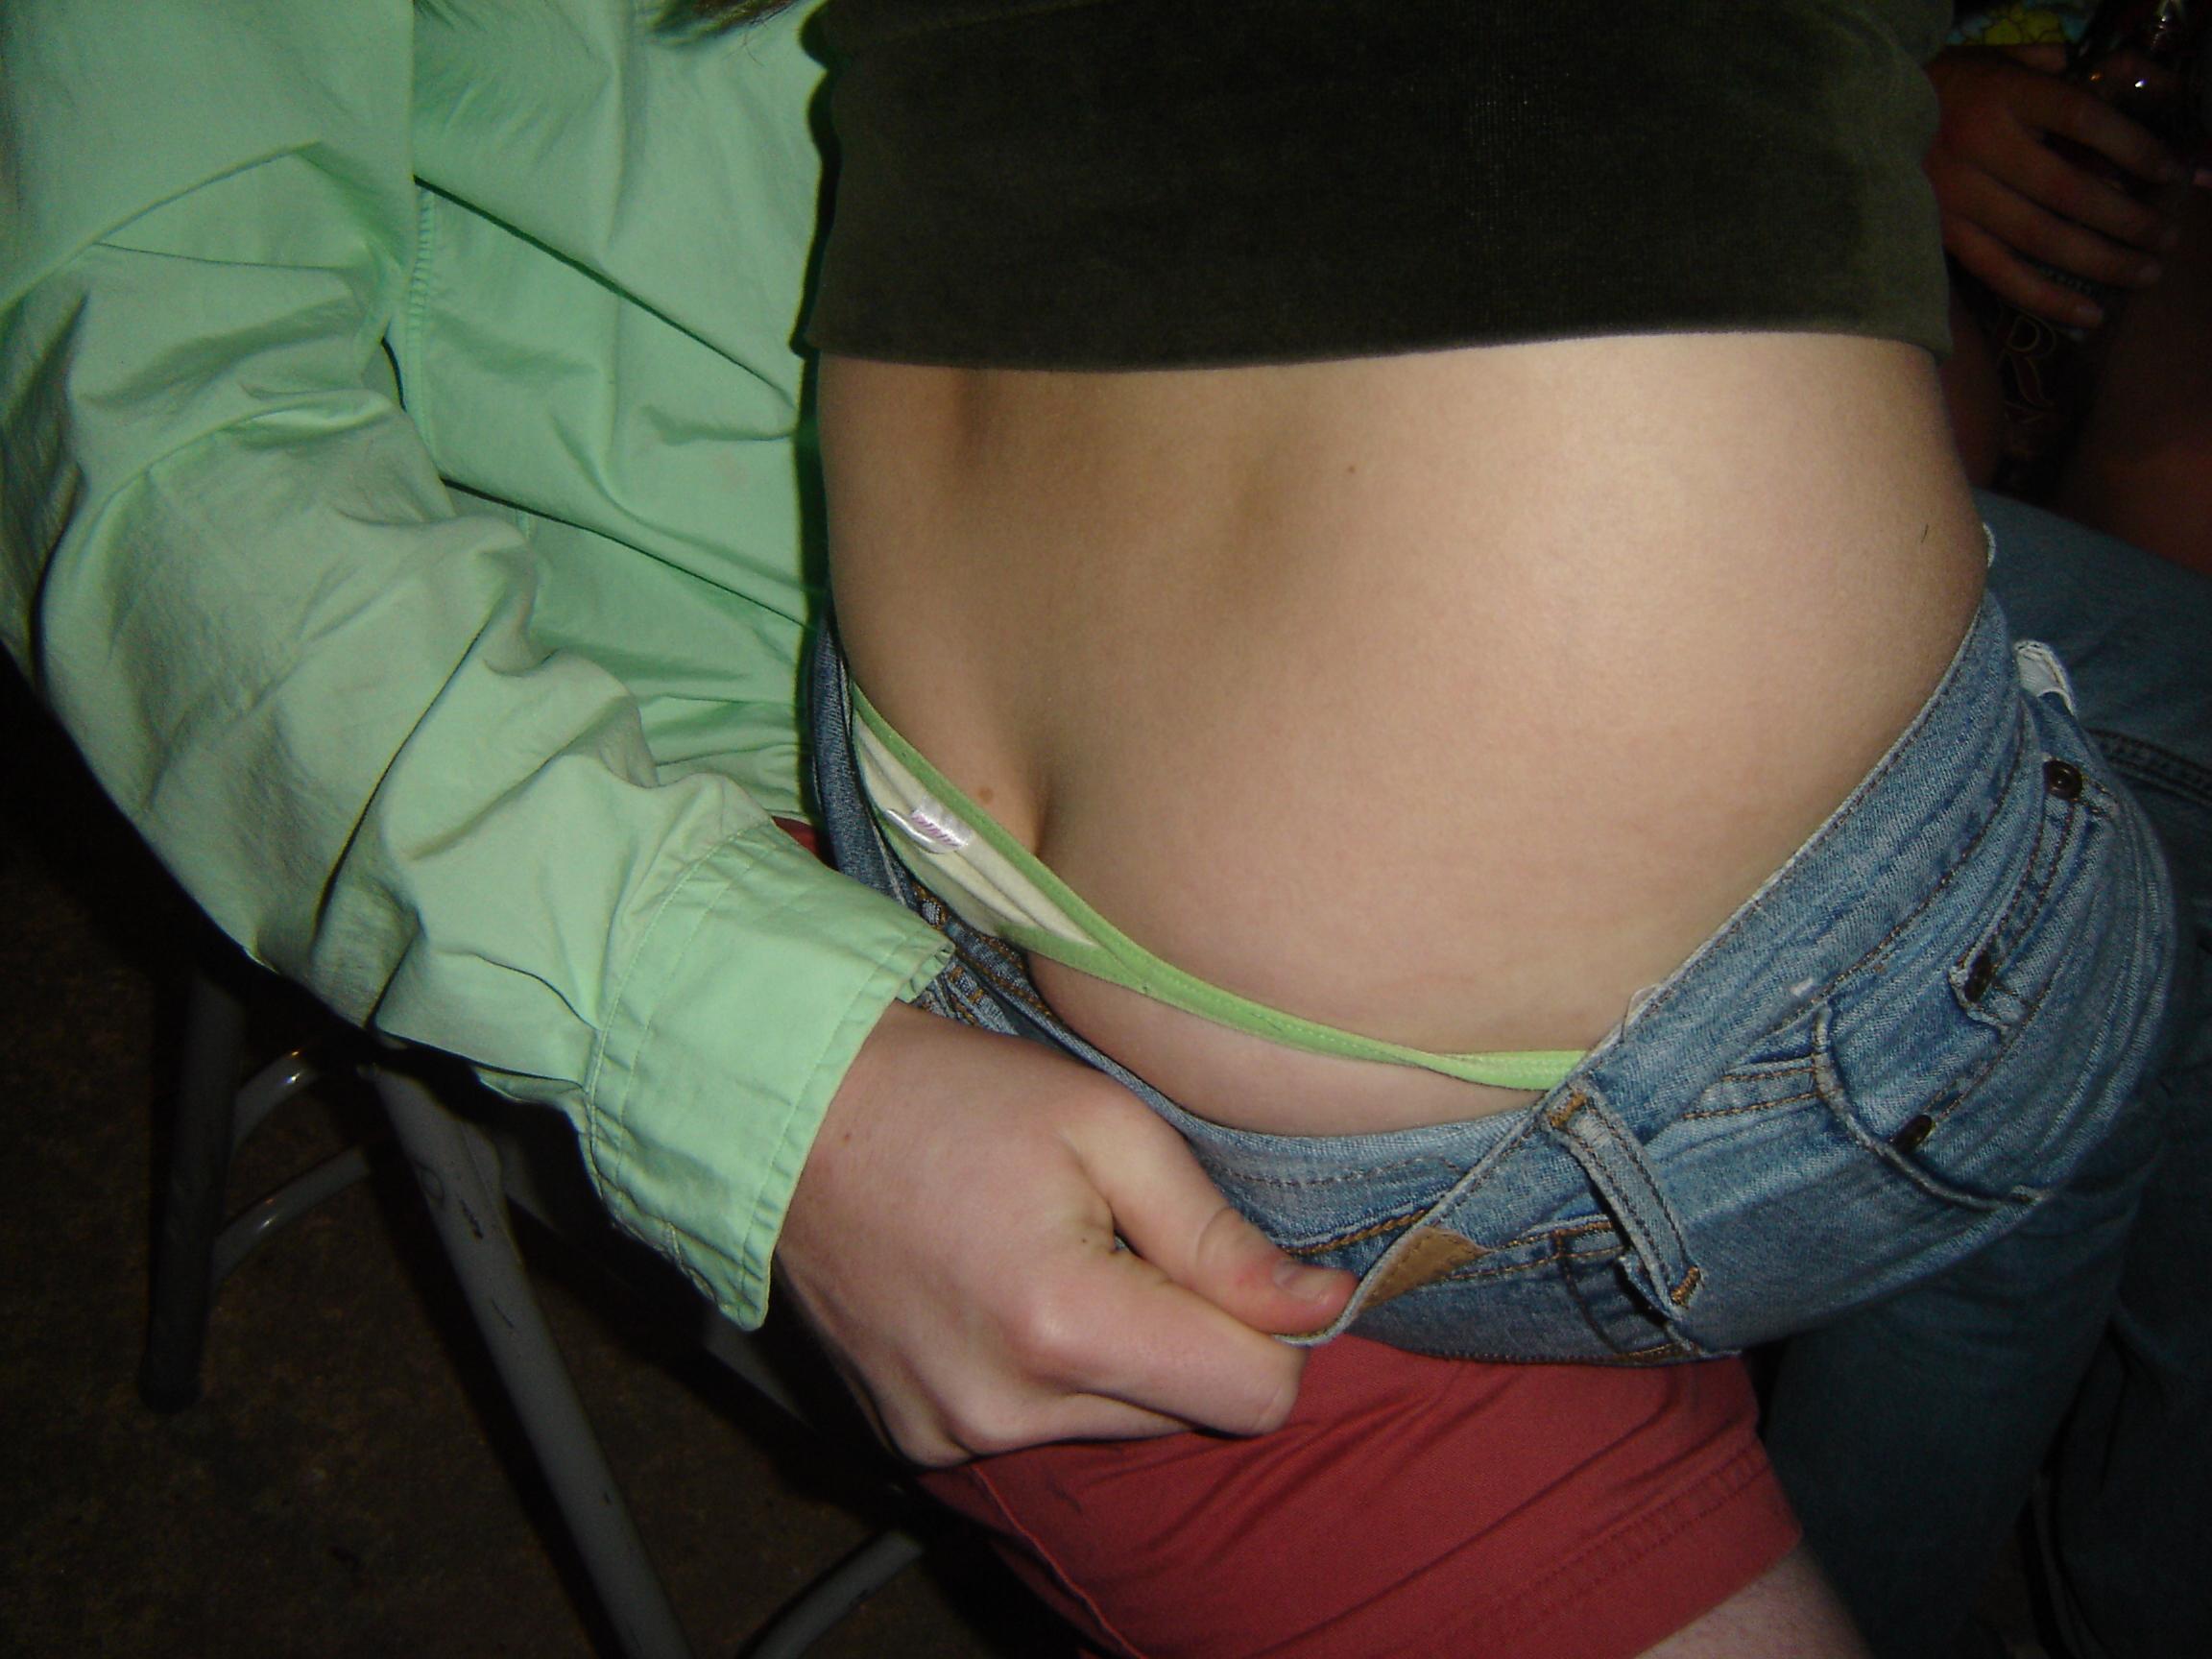 Voyeur cams caught girls-next-door showing off their thongs foto foto